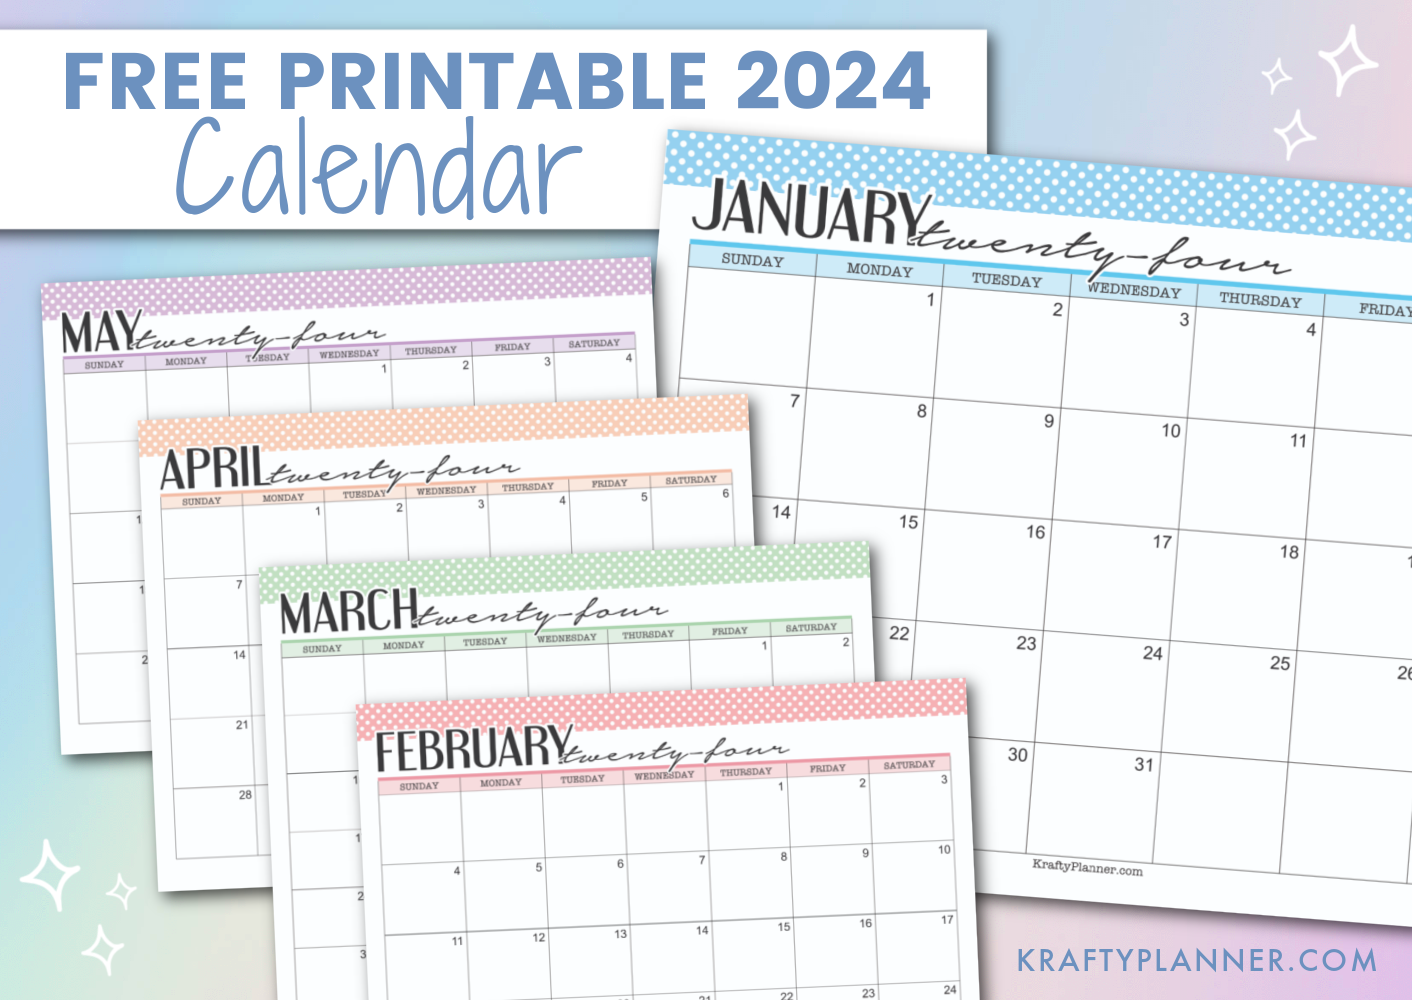 Free Printable 2024 Calendars (Color) — Krafty Planner for Printable Calendar 2024 Color